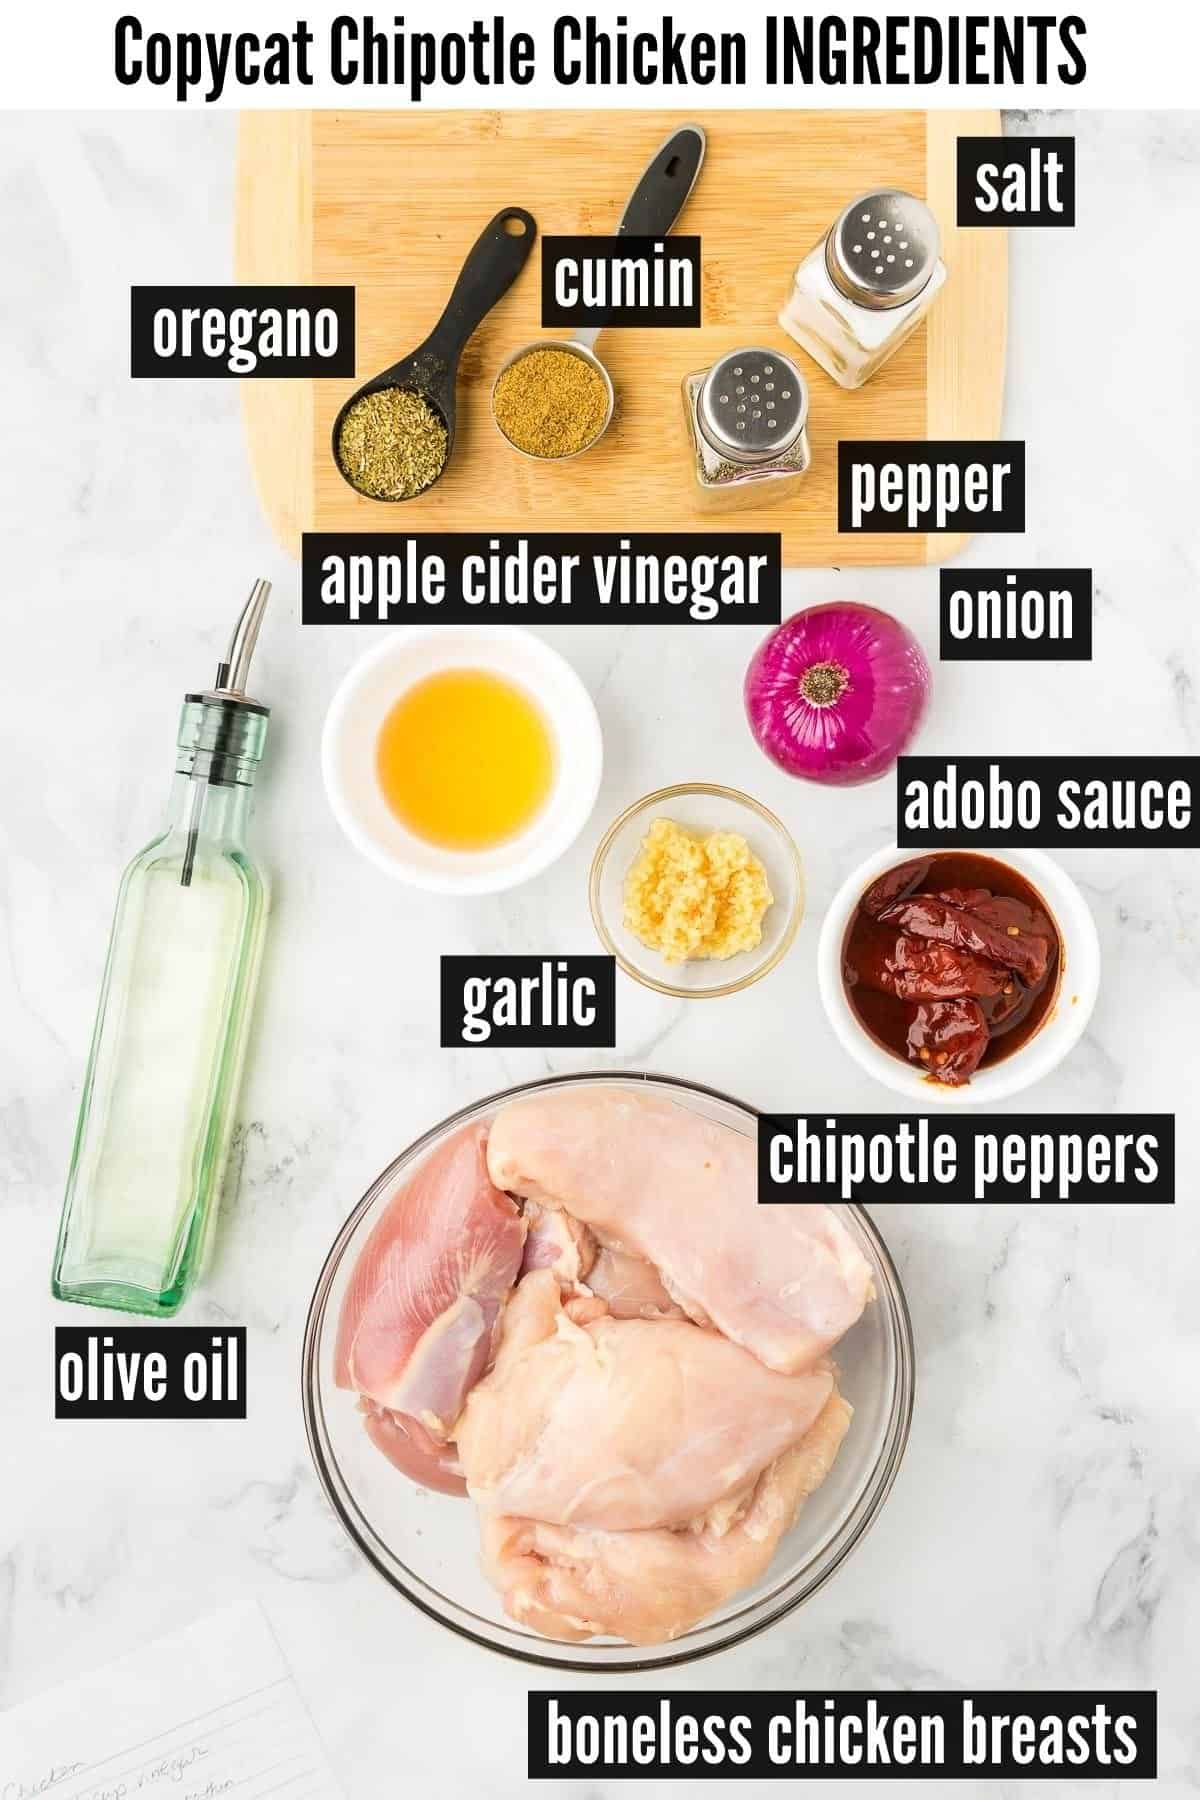 copycat chipotle chicken labelled ingredients